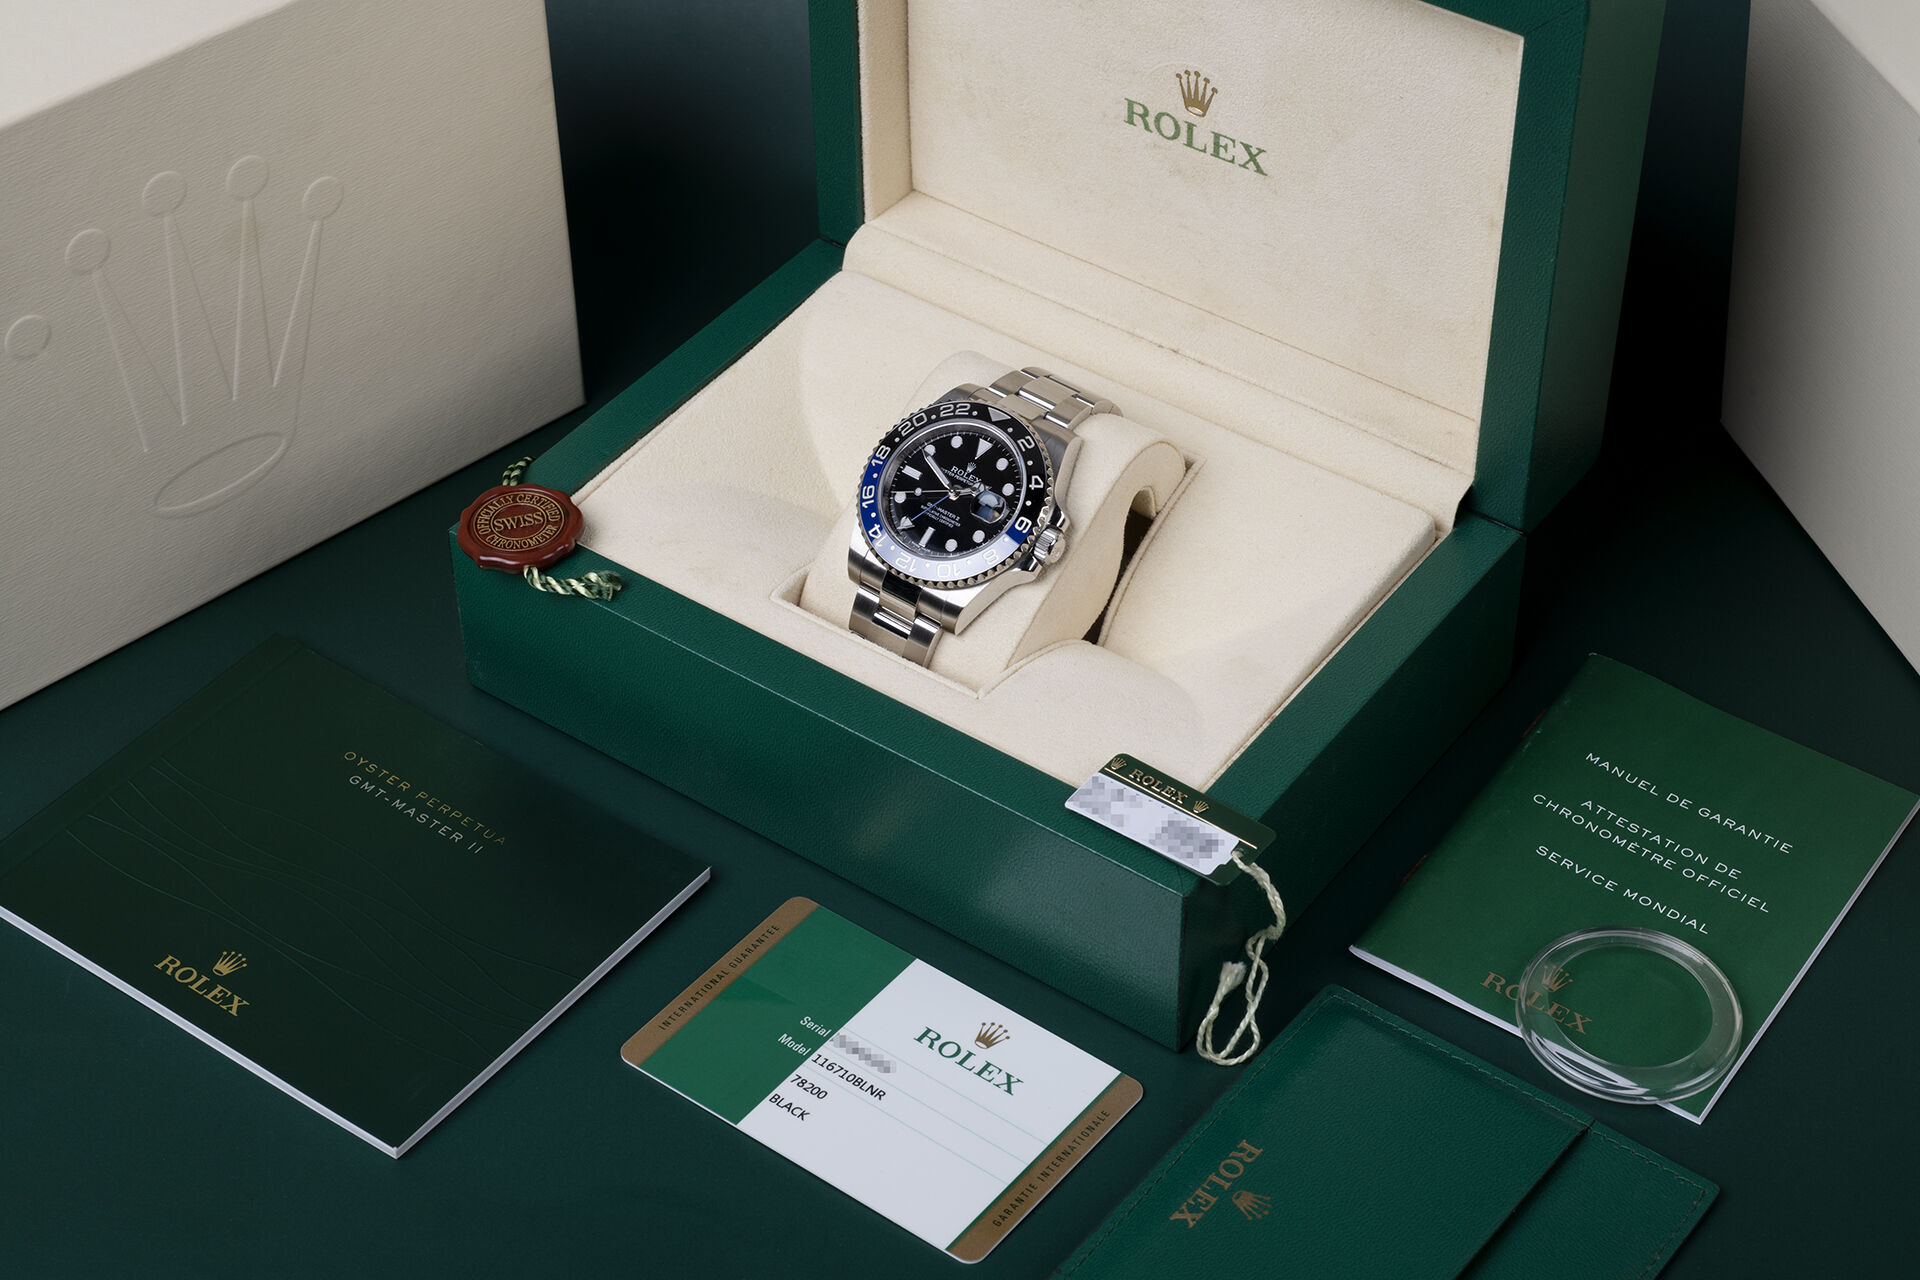 ref 116710BLNR | Box & Certificate | Rolex GMT-Master II